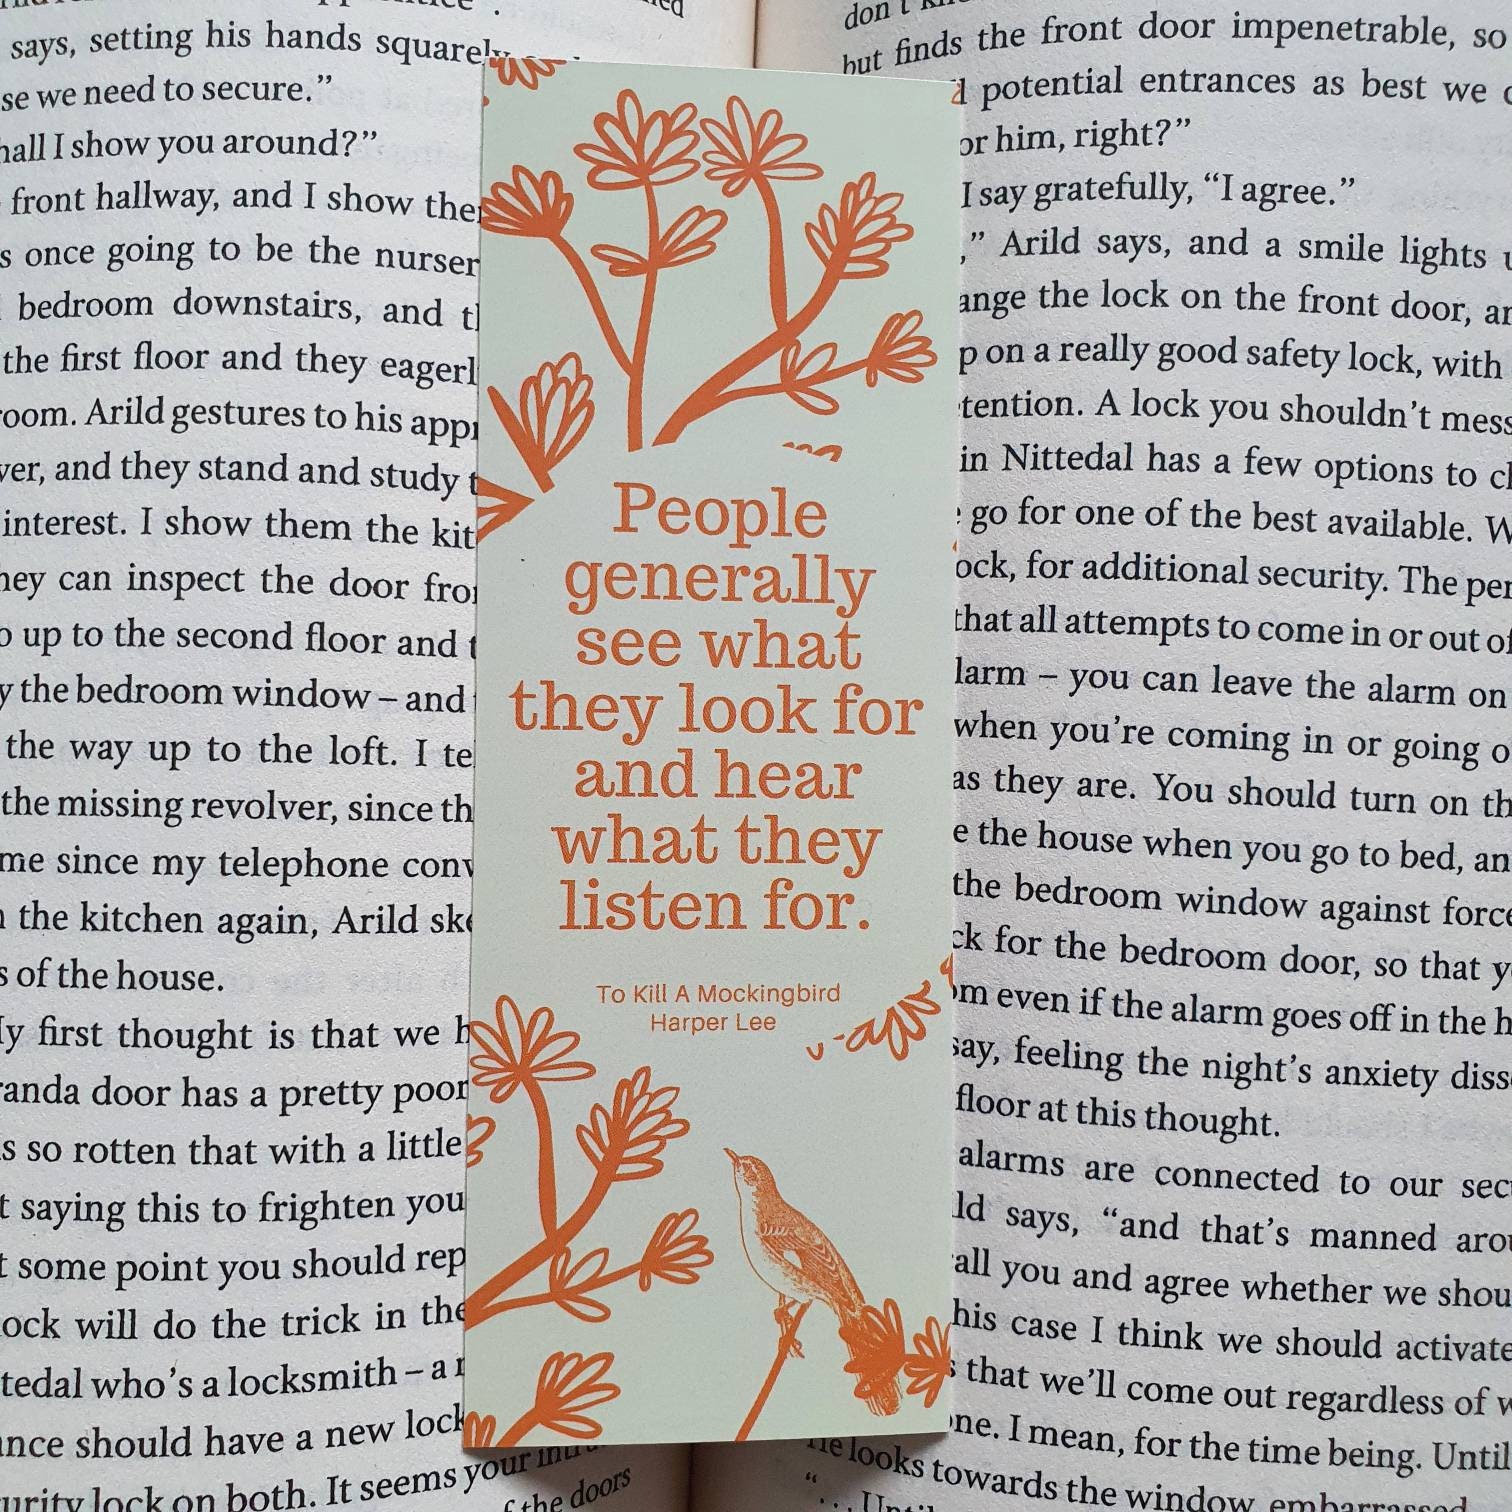 To Kill a Mockingbird Inspired Bookmark Harper Lee Reading -  Portugal